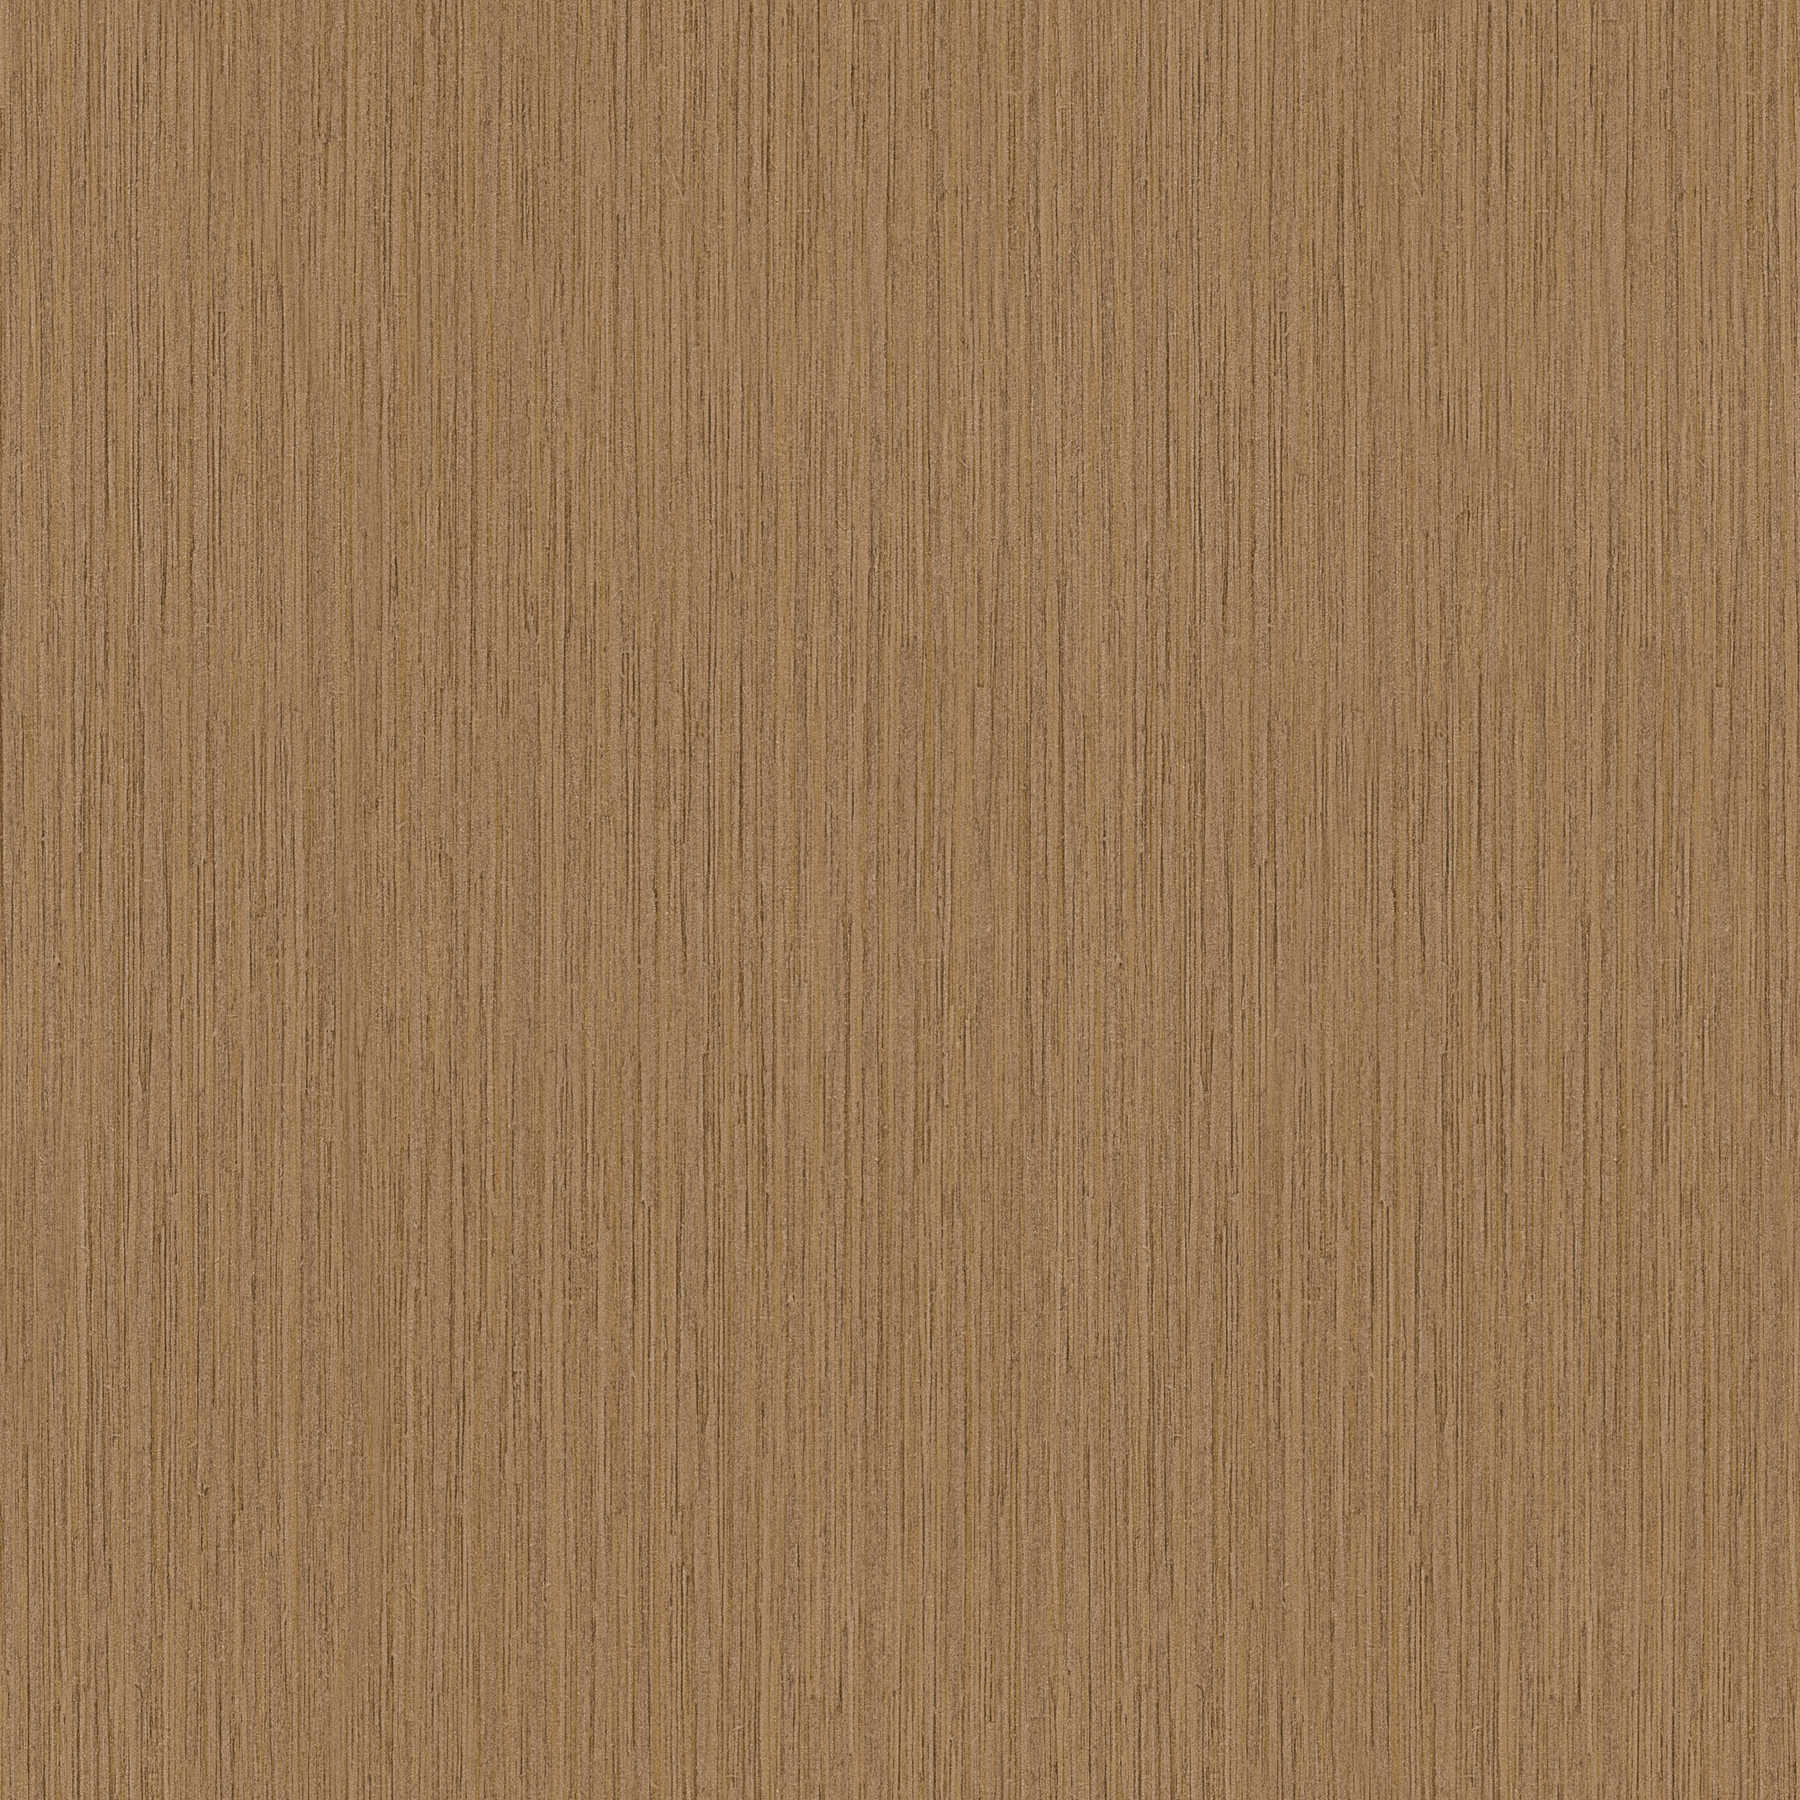 Natuurbehang houtlook donker bamboe - bruin
